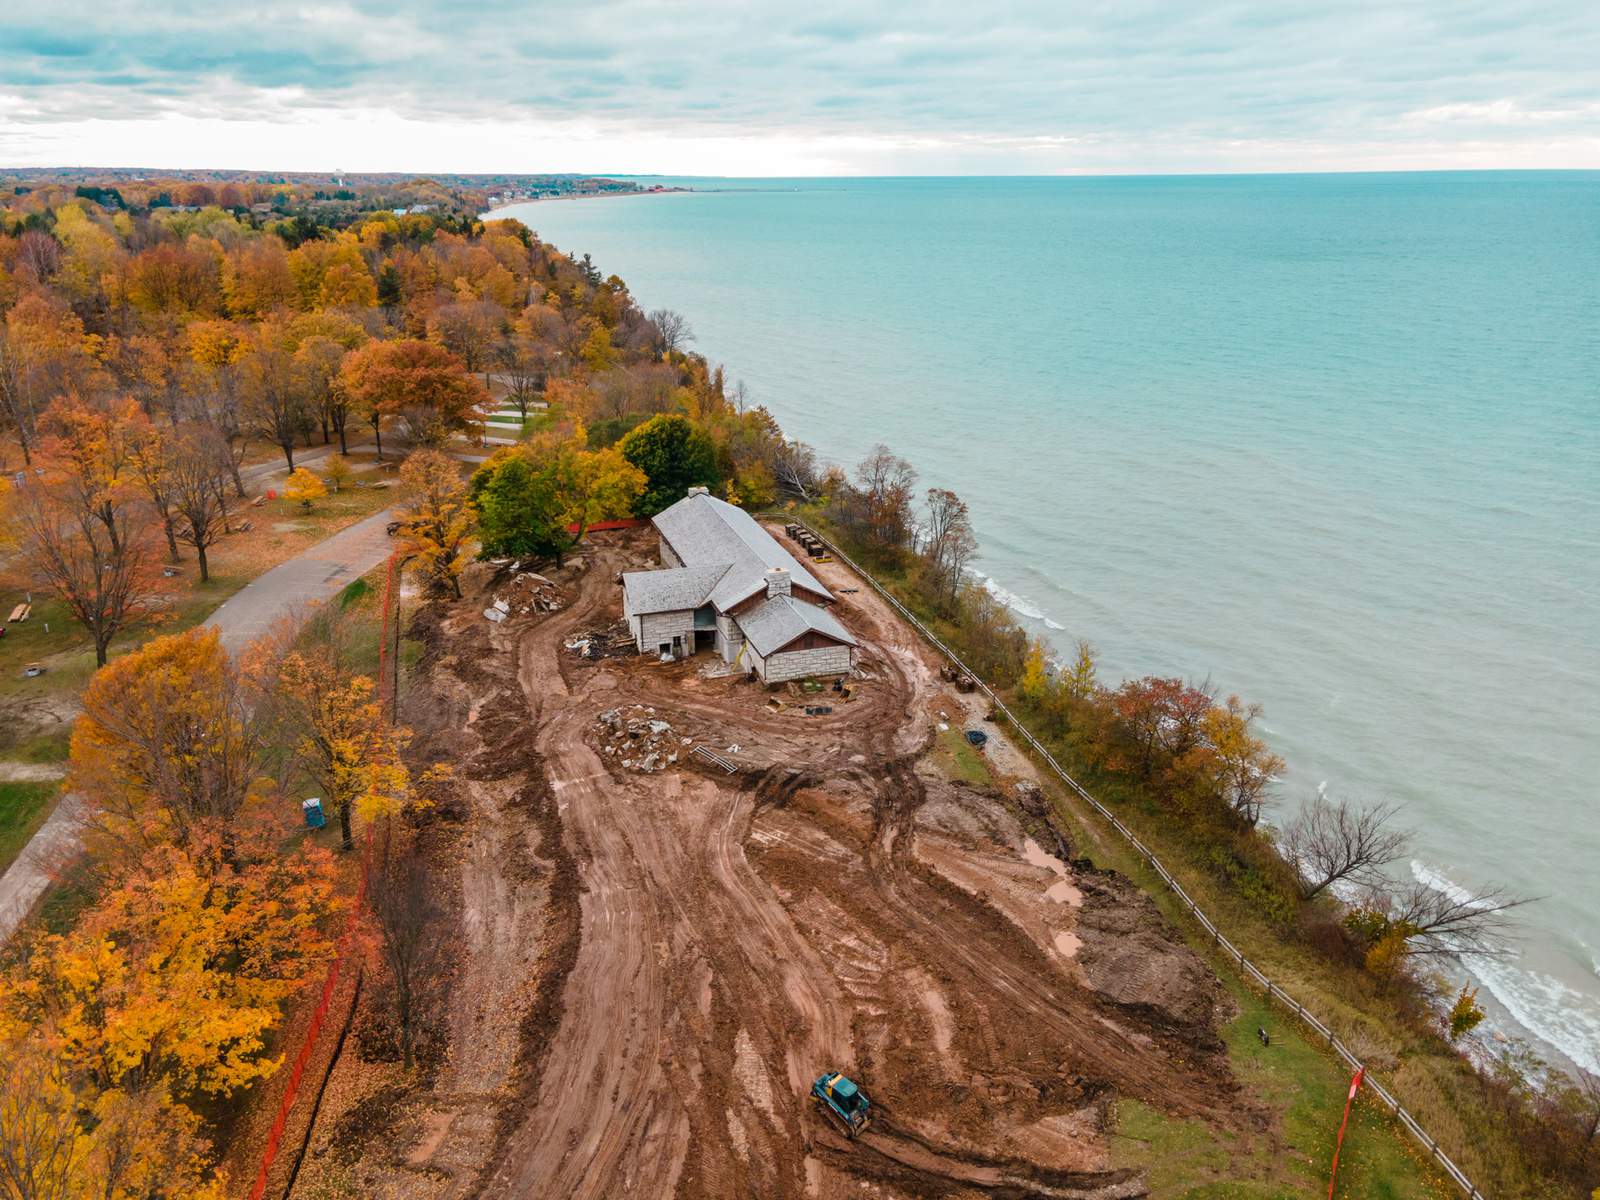 Michigan DNR moves historic building away from eroding Lake Michigan shoreline